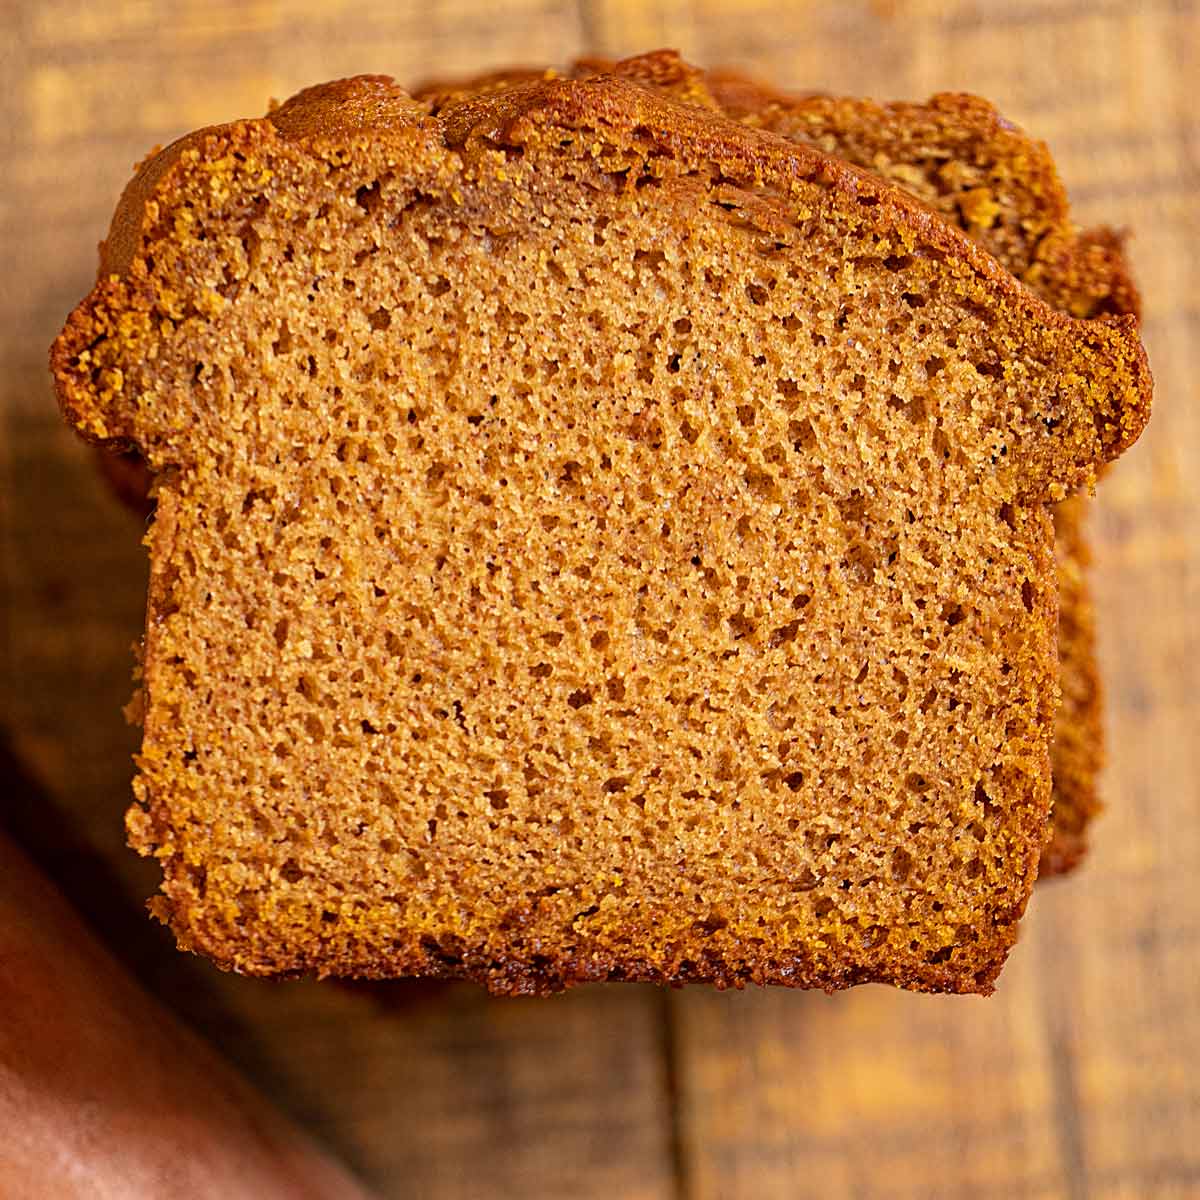 https://dinnerthendessert.com/wp-content/uploads/2020/06/Sweet-Potato-Bread-1x1-2.jpg